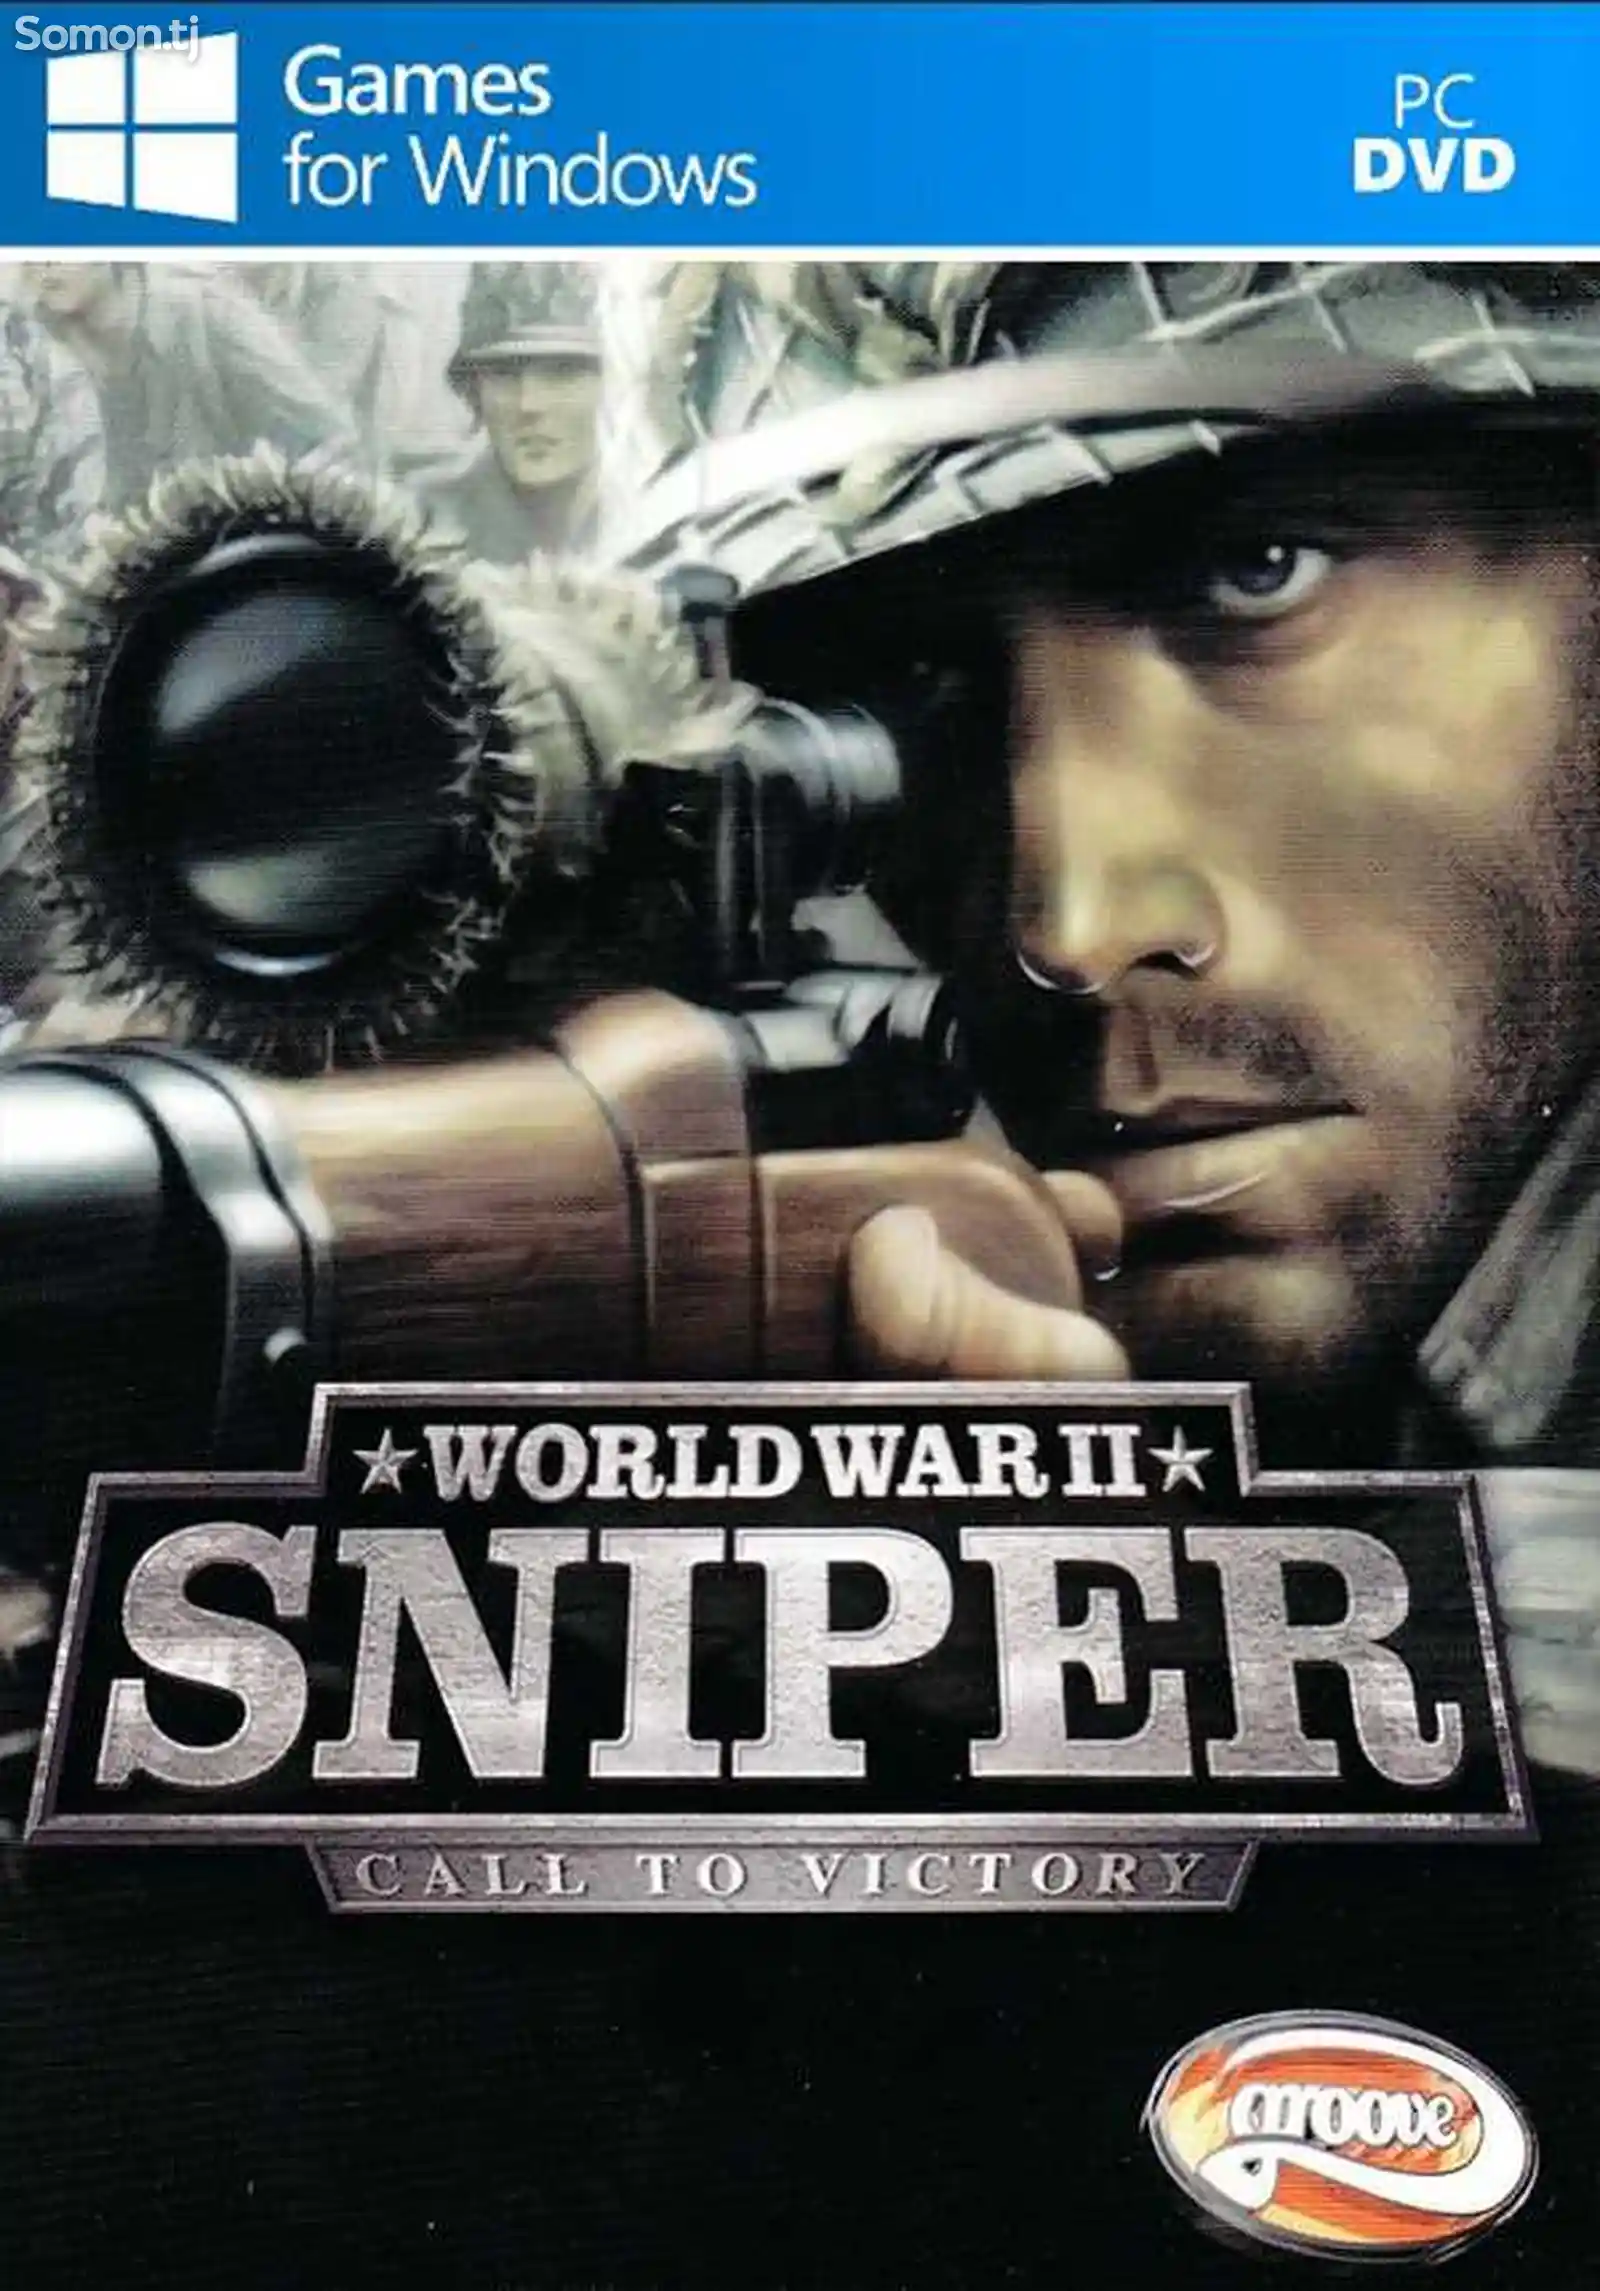 Игра Sniper Сall of victory World war 2 для компьютера-пк-pc-1